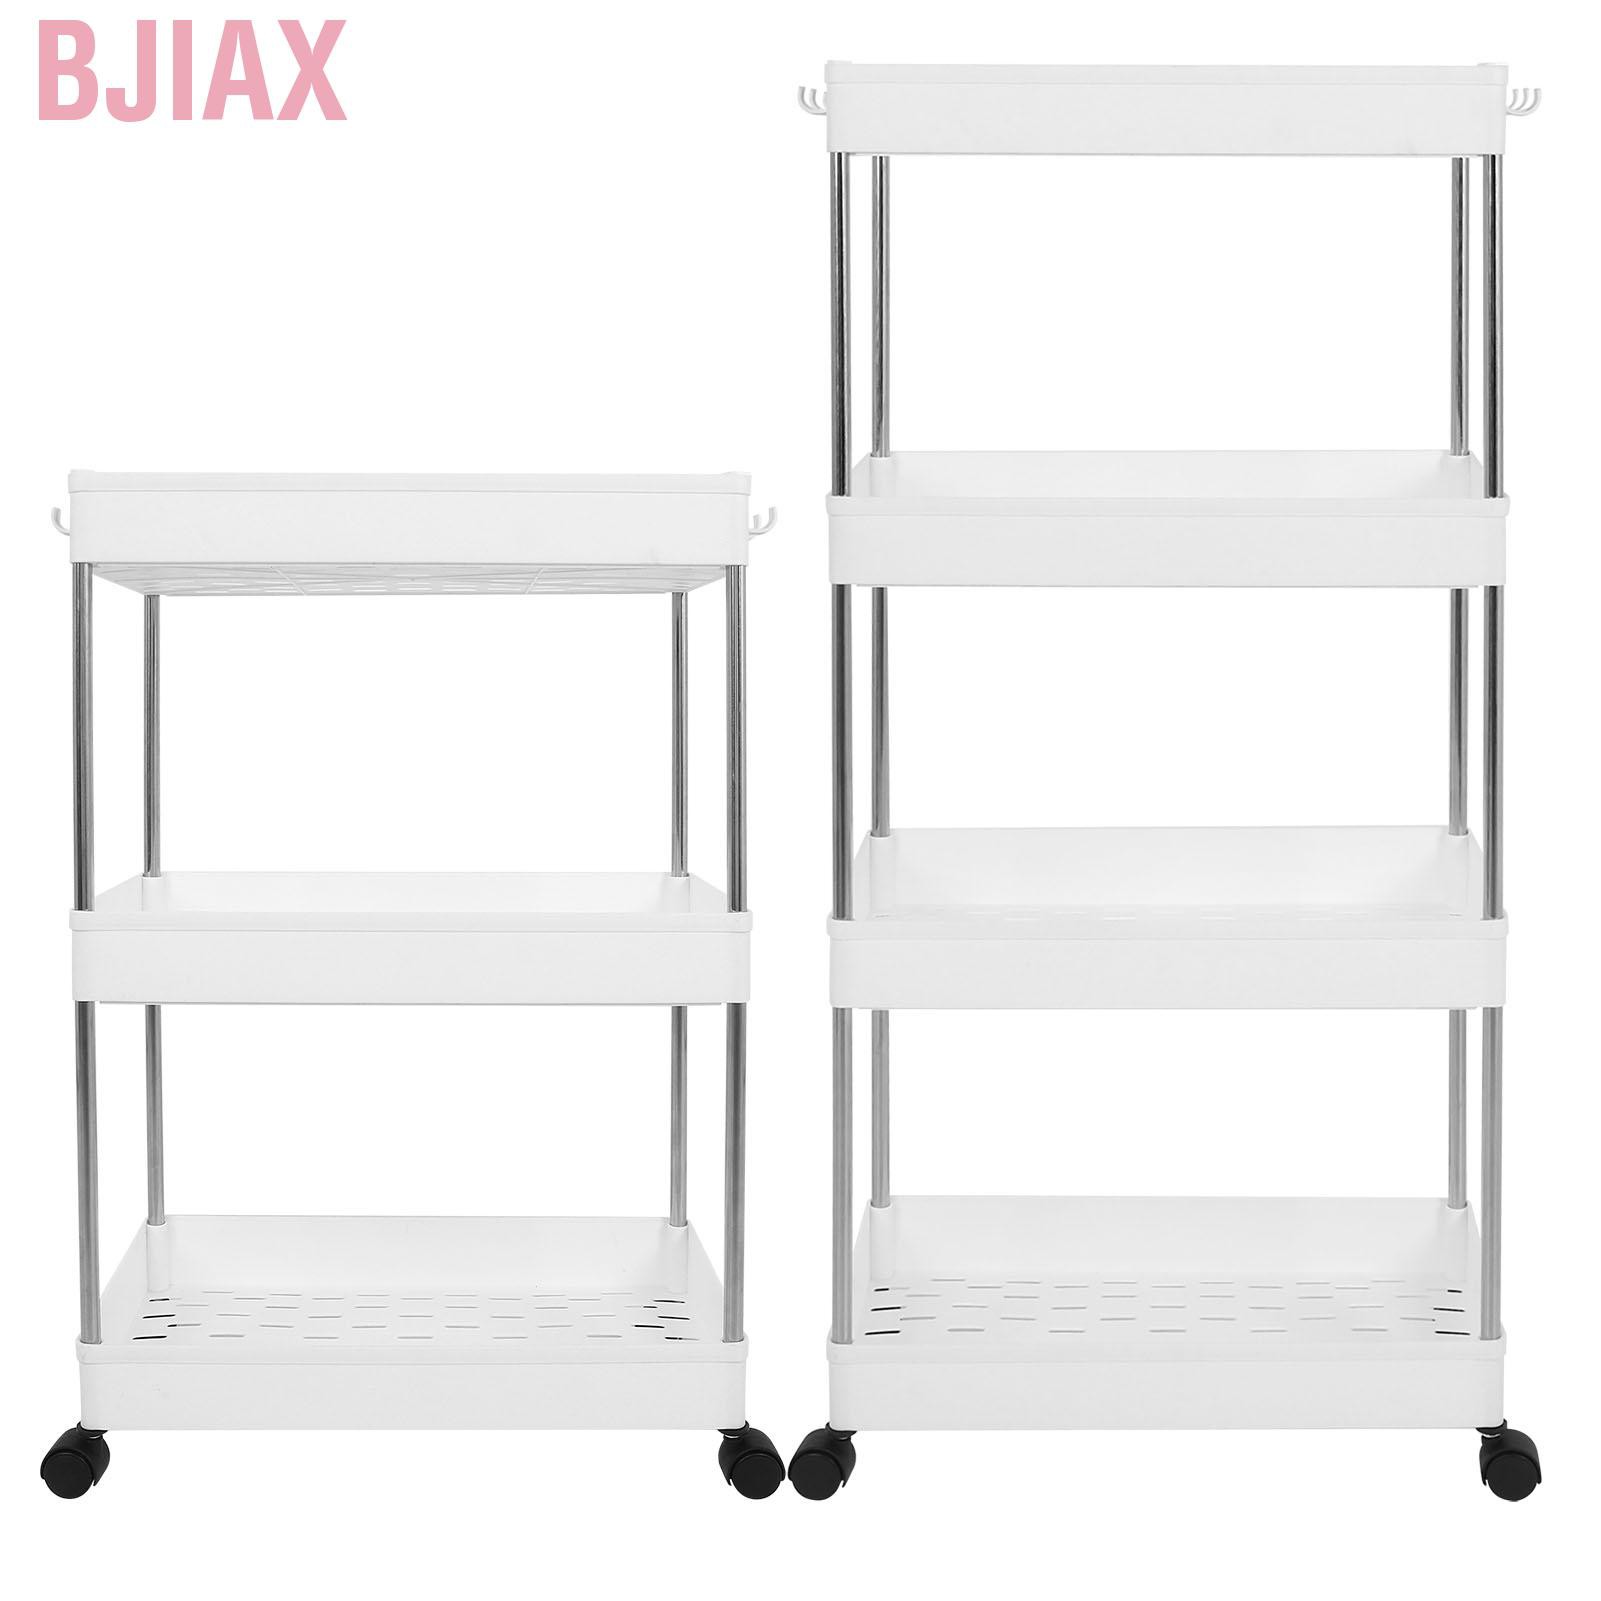 Bjiax Slim Storage Cart Mobile Shelving, Slim Shelving Unit